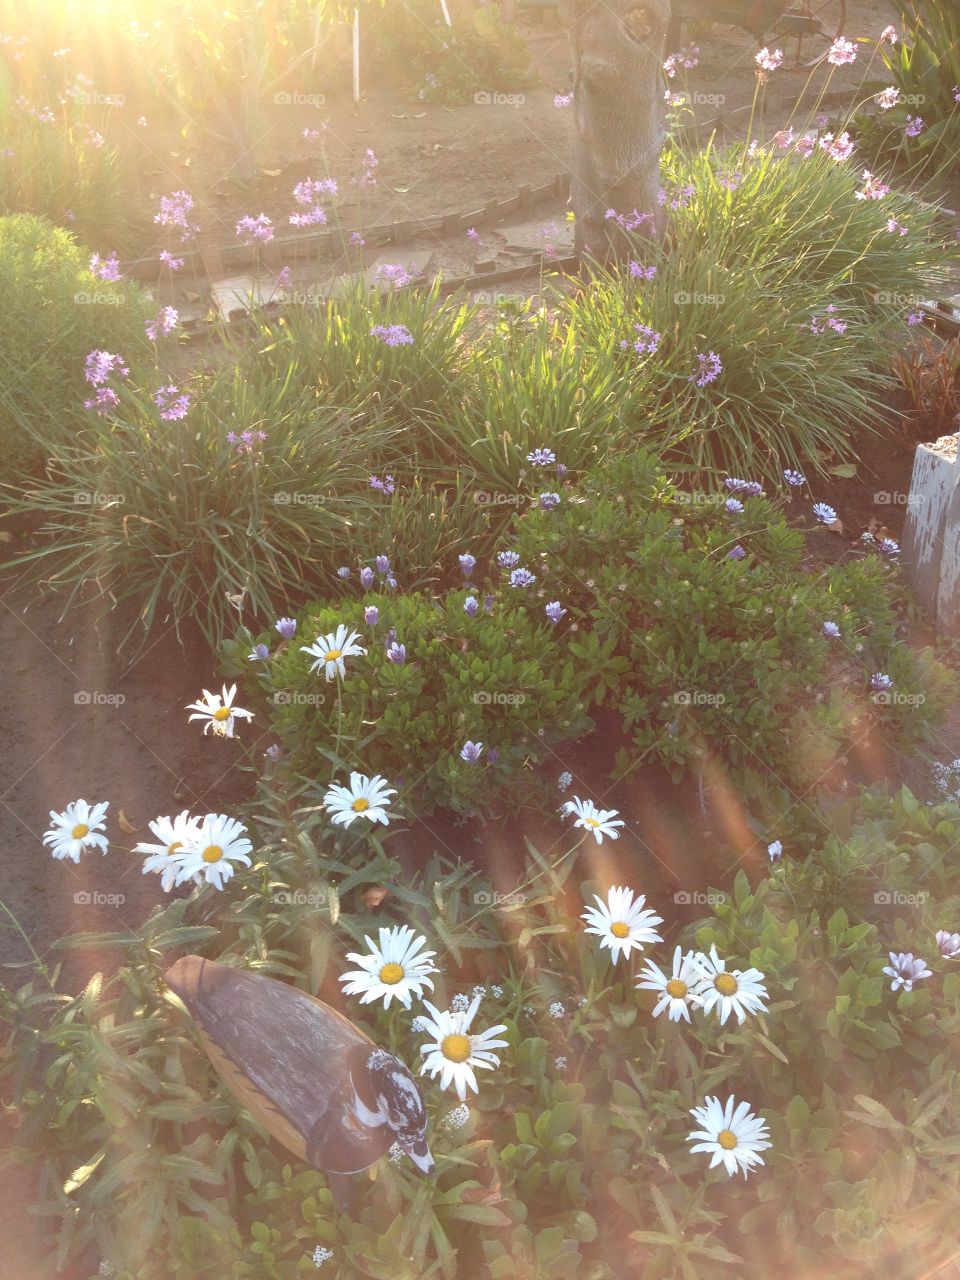 Sunlit Flowers